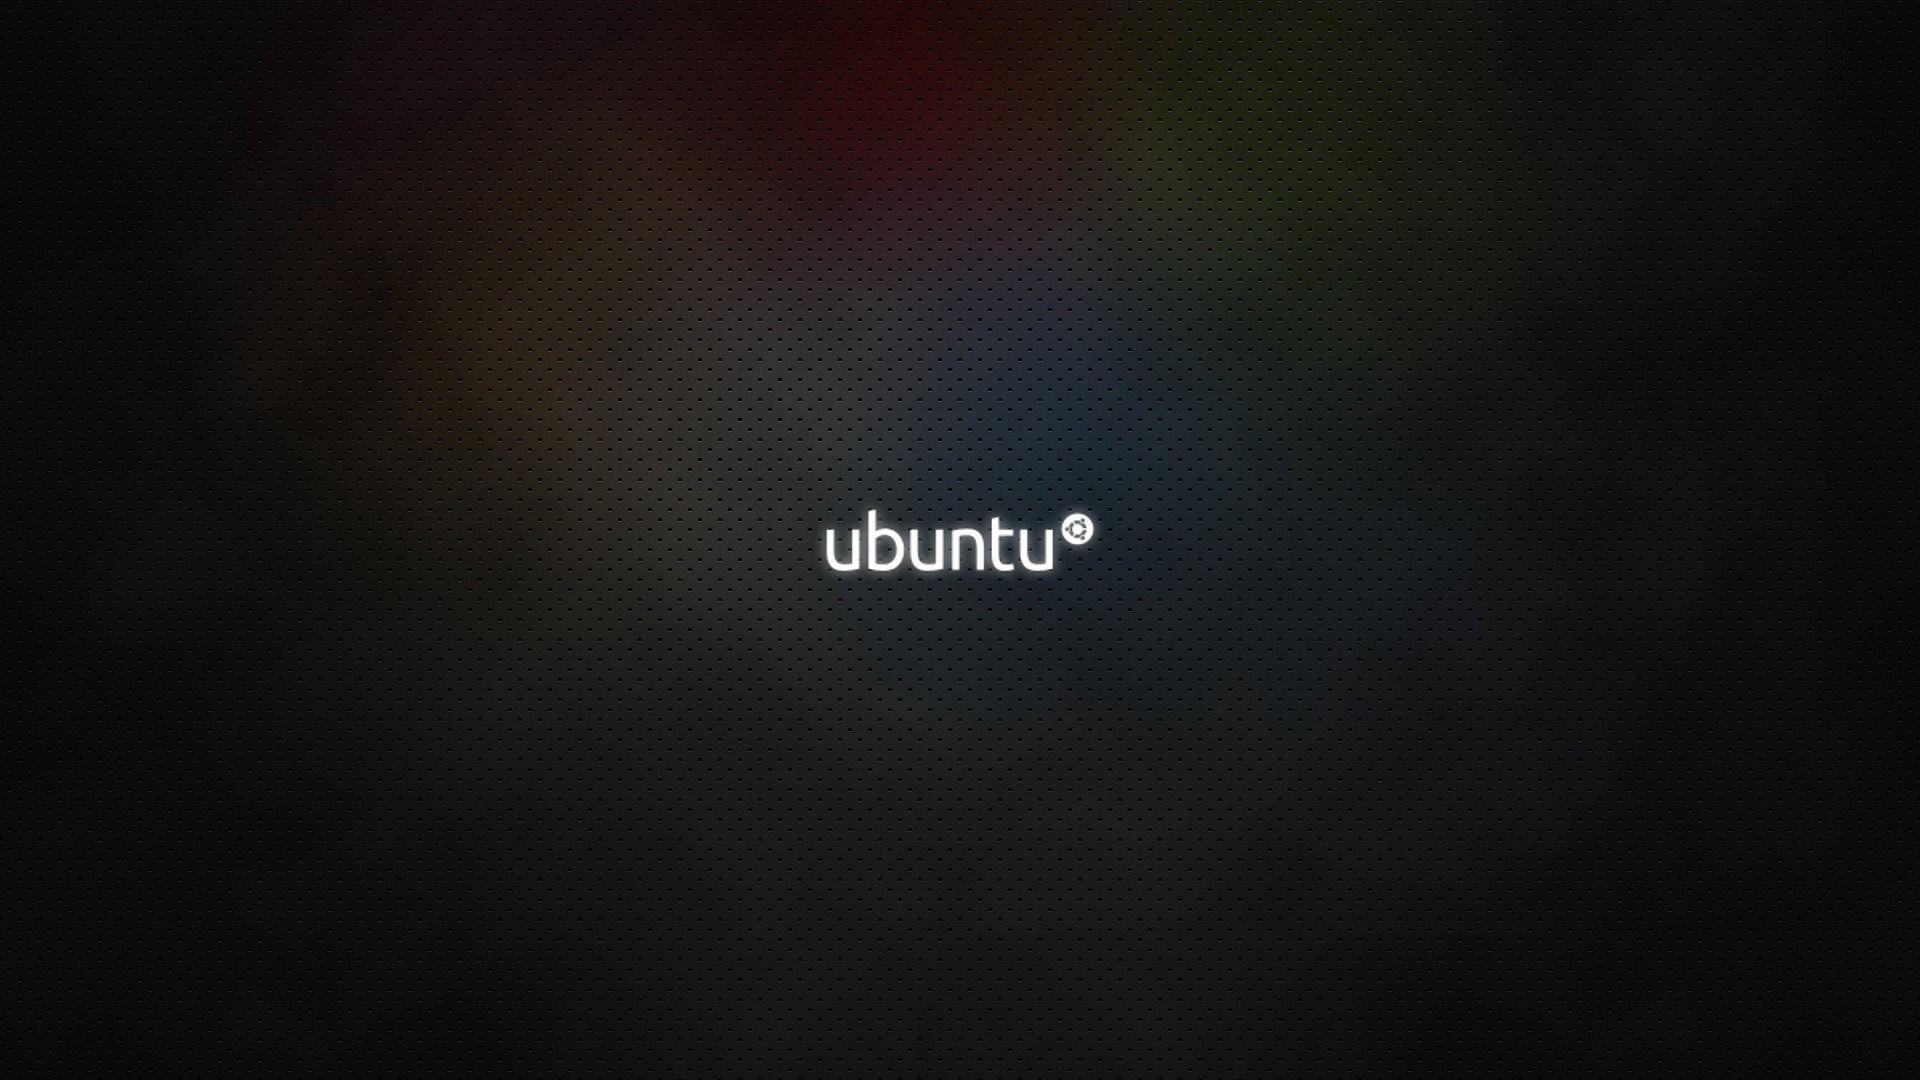 Ubuntu Green Linux System Desktop Background Wallpaper X